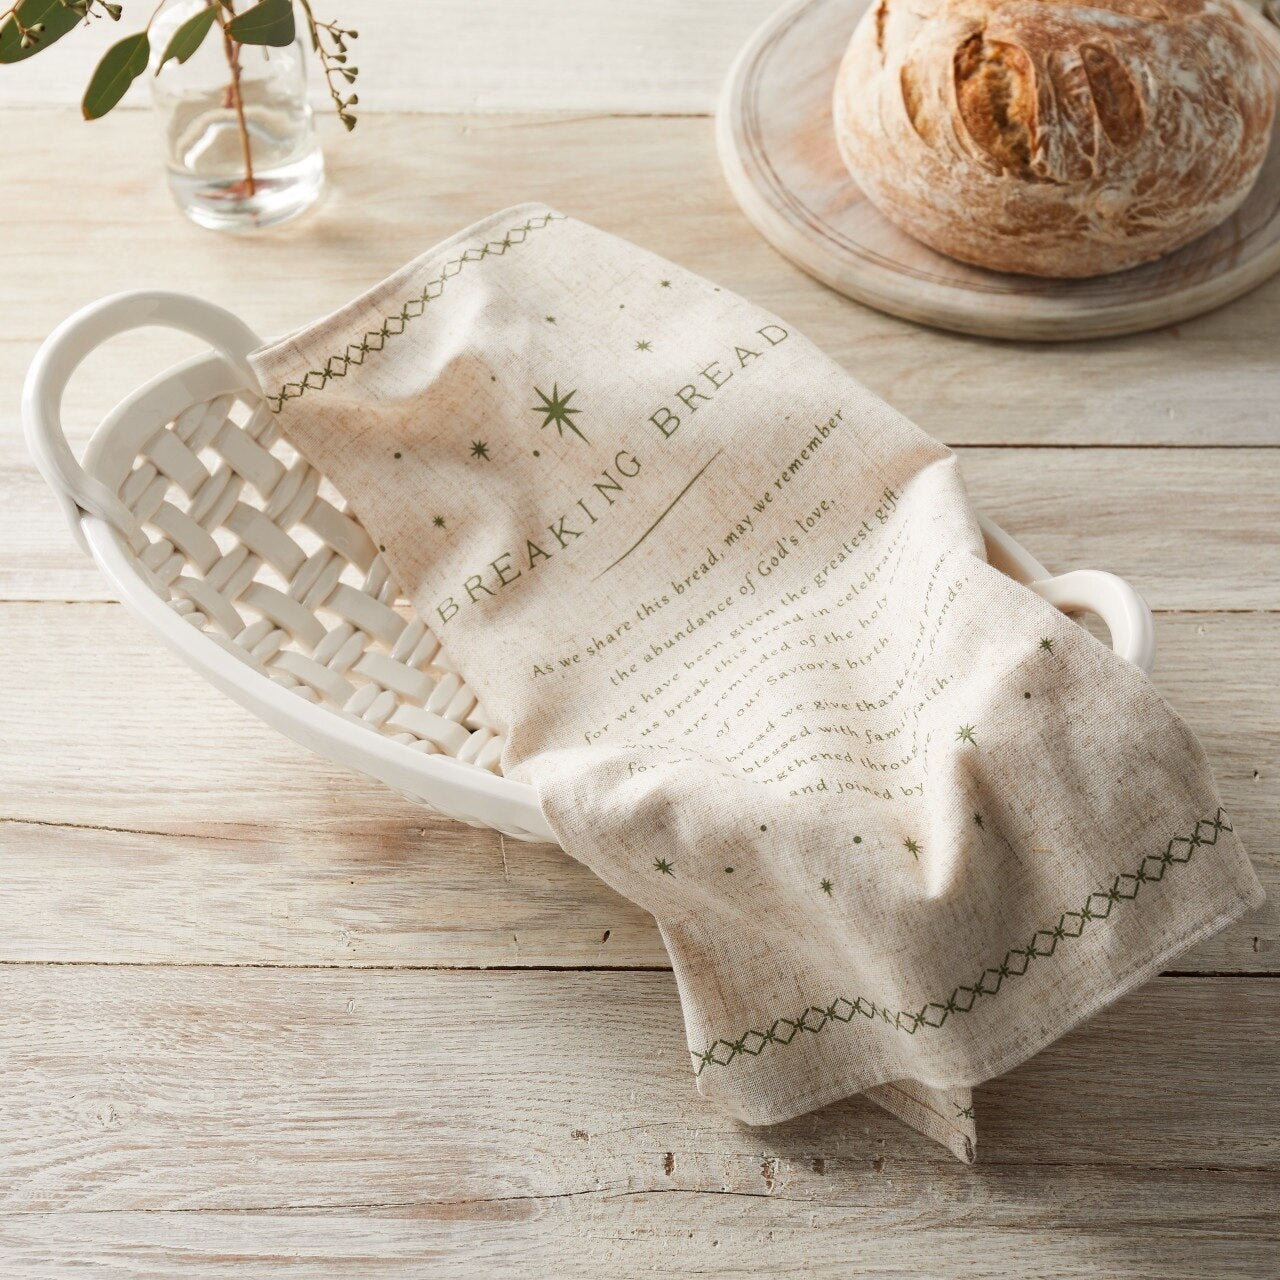 Ceramic Bread Basket with Towel